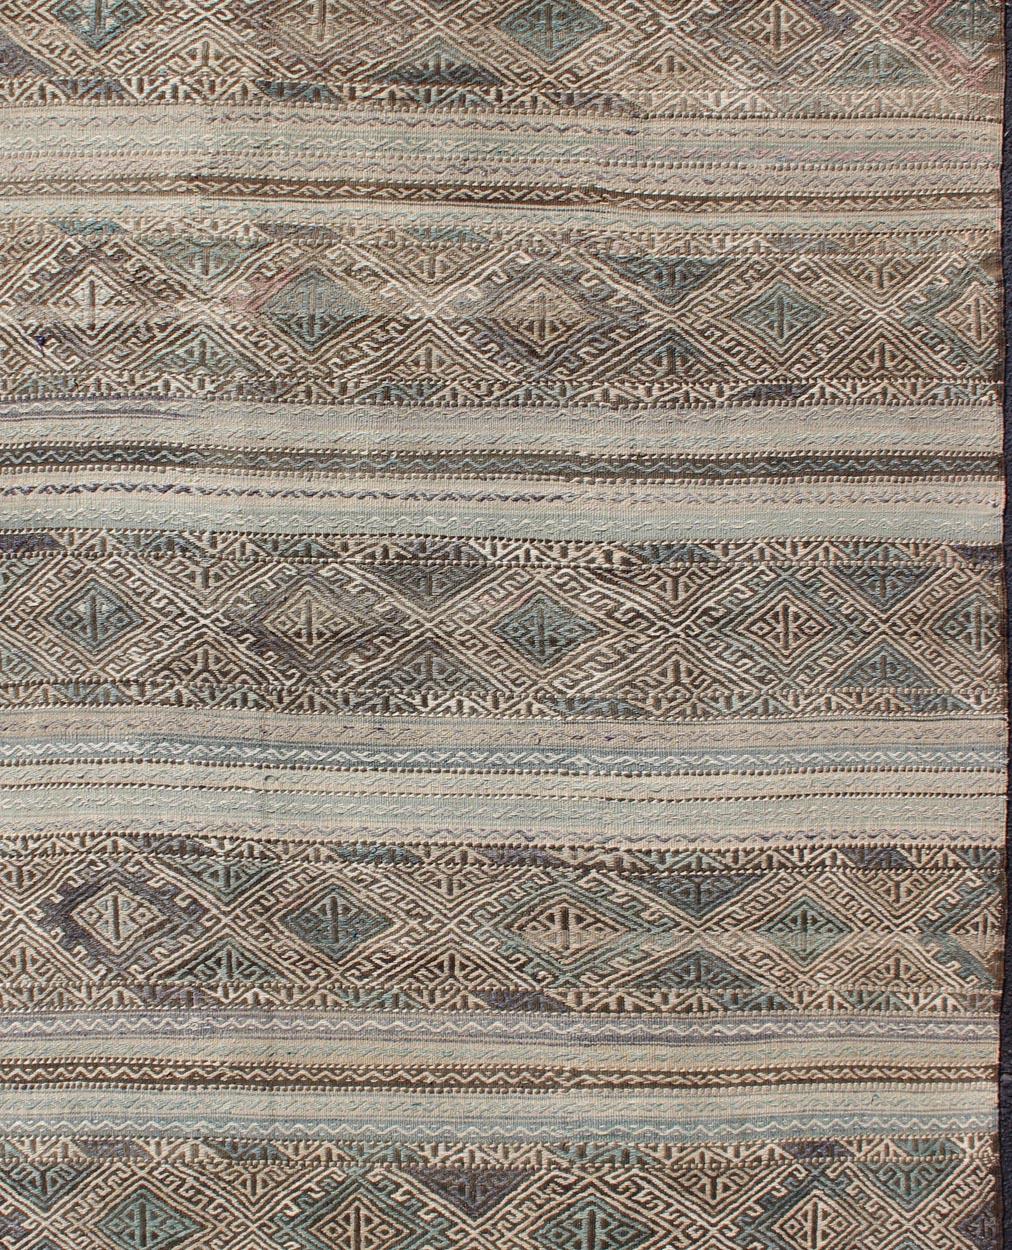 Vintage flat-weave Kilim with embroideries with a modern design in tan, brown, green and blue
geometric stripe design Vintage Kilim from Turkey, rug EN-179526, country of origin / type: Turkey / Kilim, circa 1950

This vintage Turkish Kilim rug